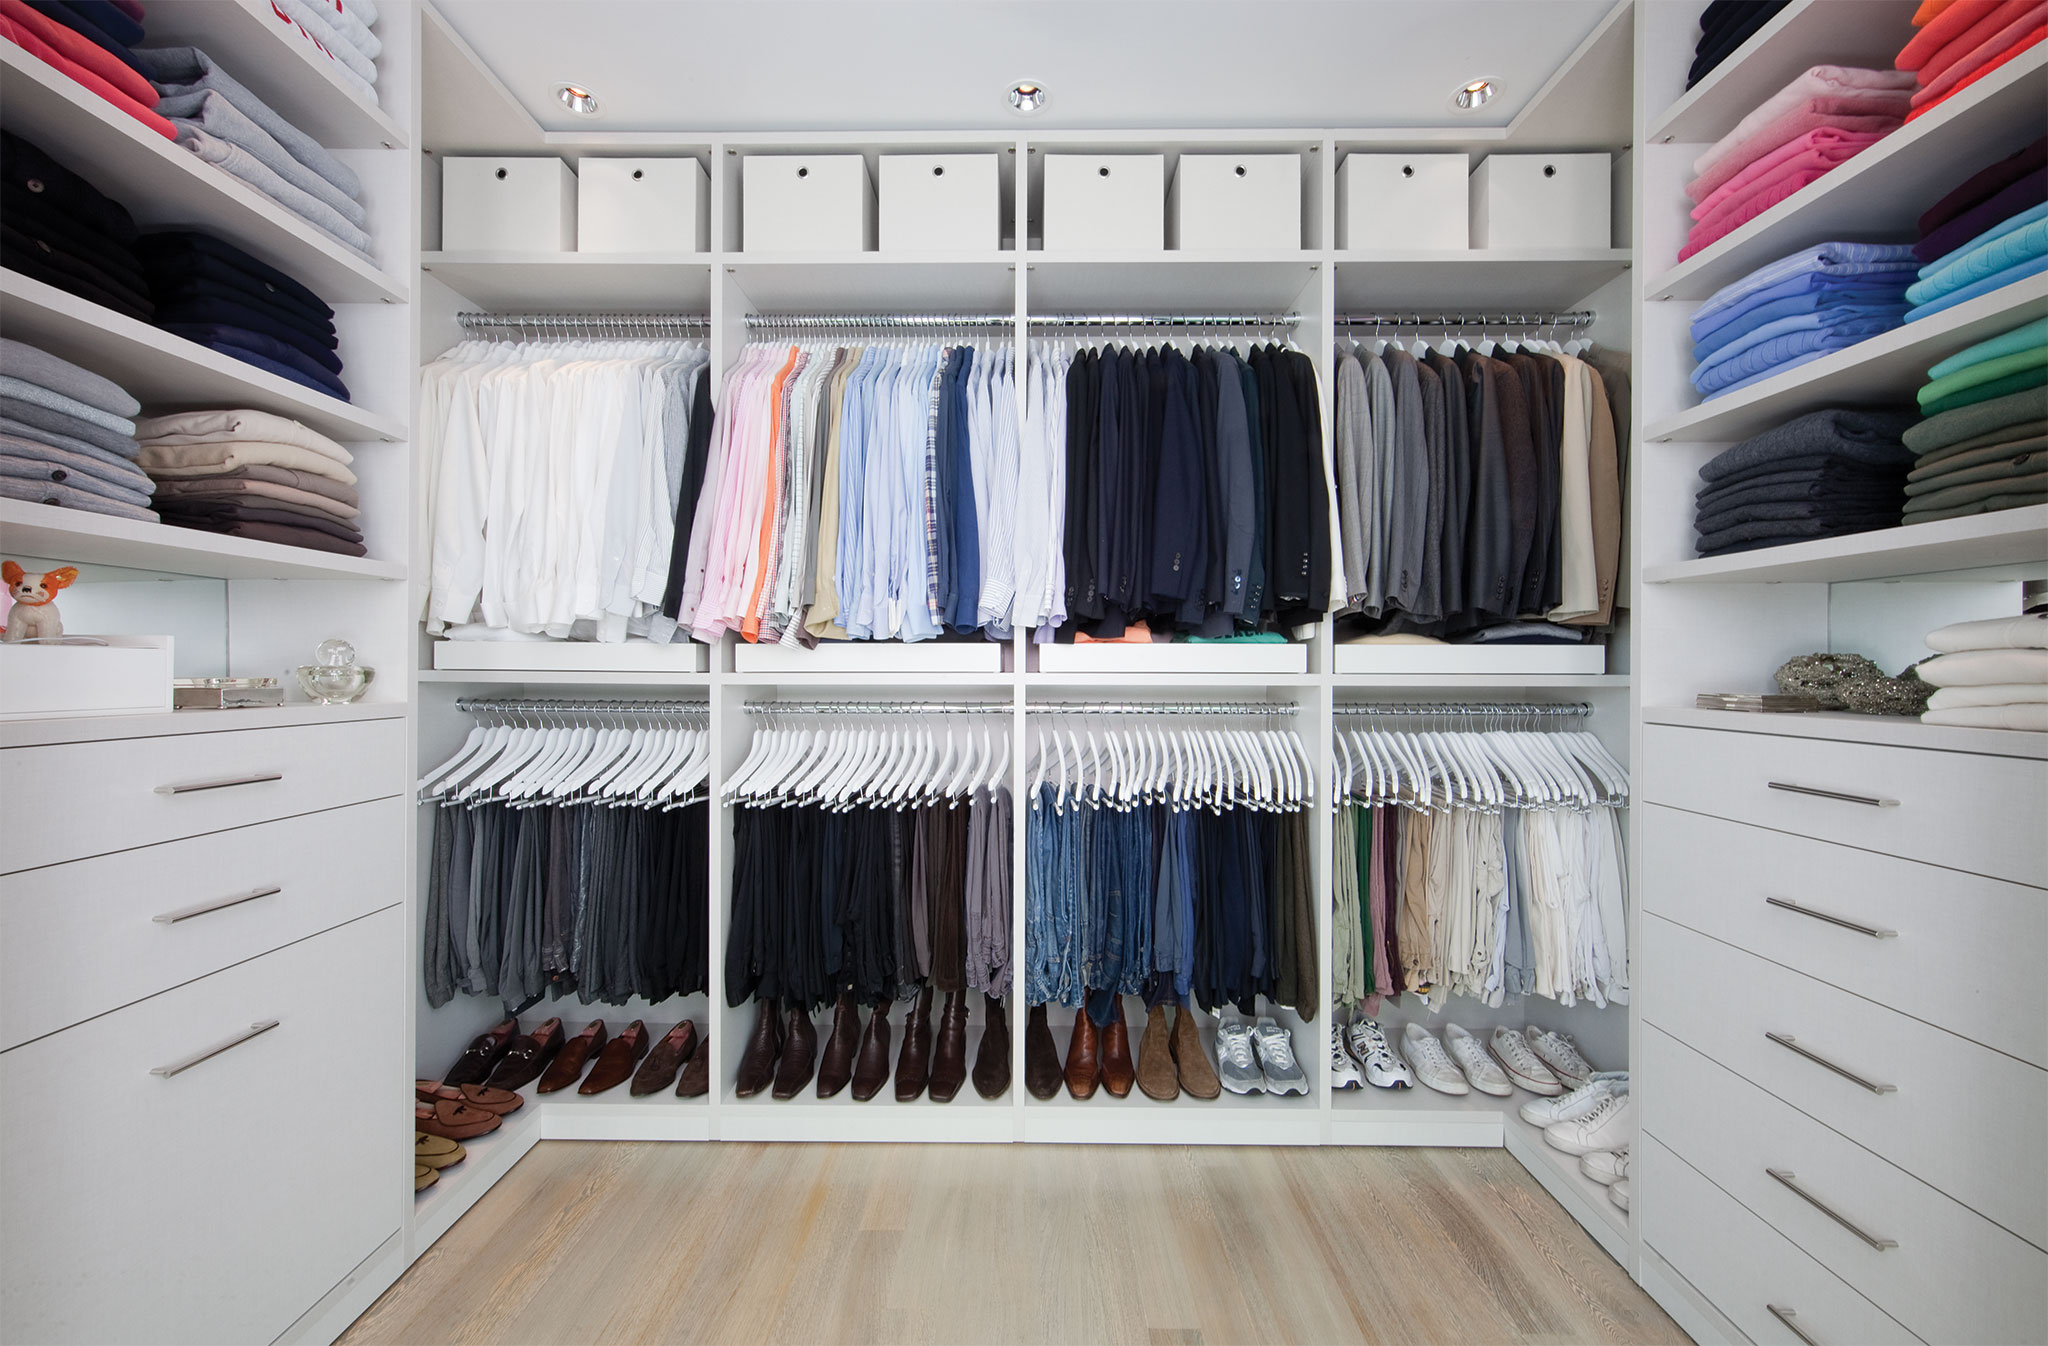 Small Coat Closet Storage Solutions - Blue i Style